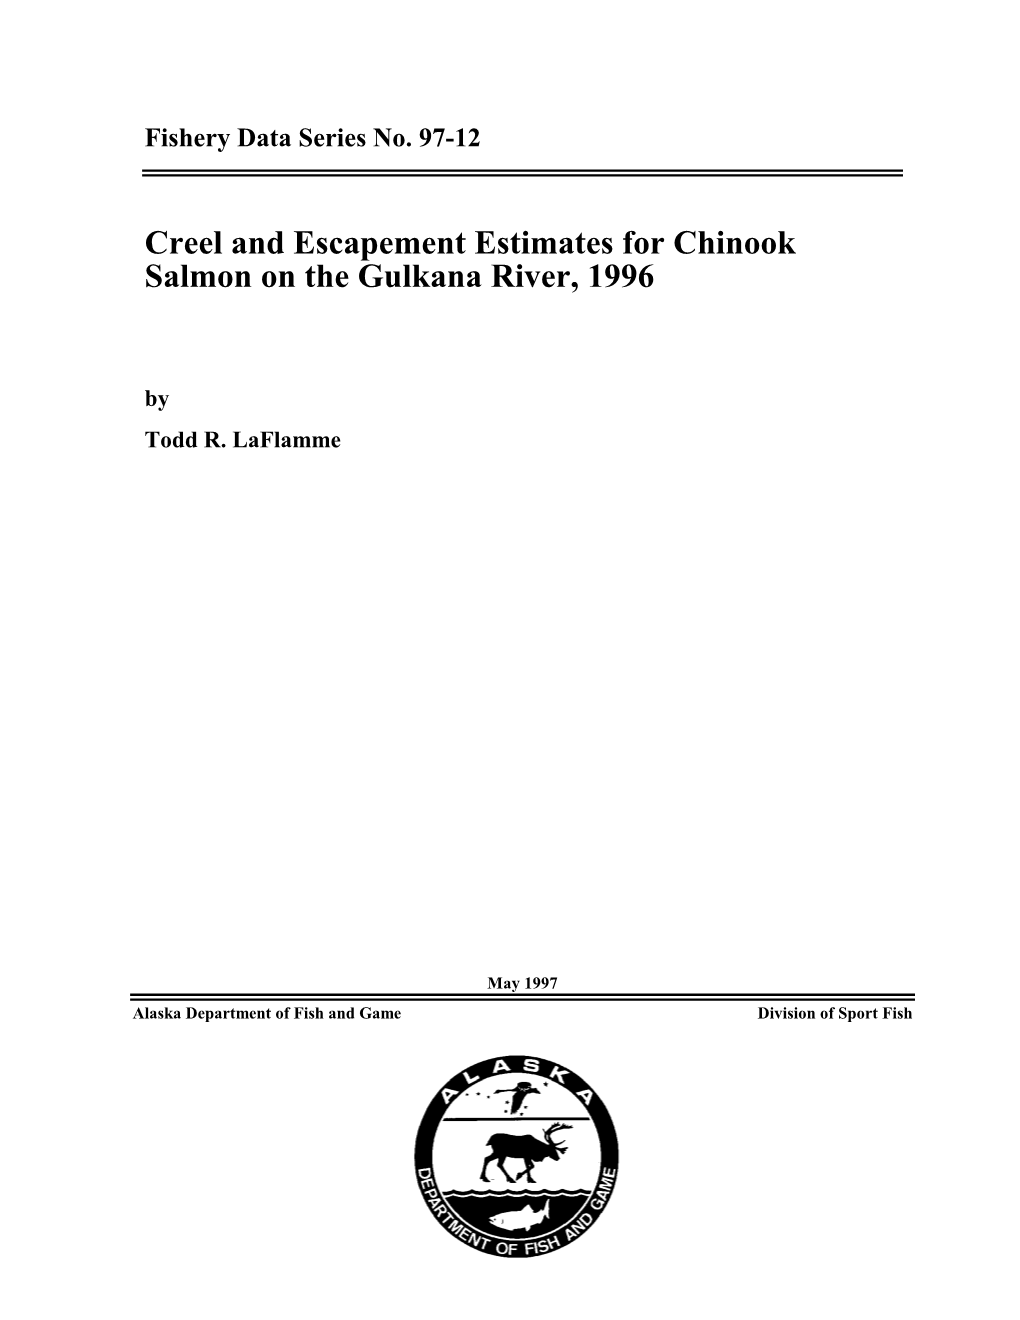 Creel and Escapement Estimates for Chinook Salmon on the Gulkana River, 1996